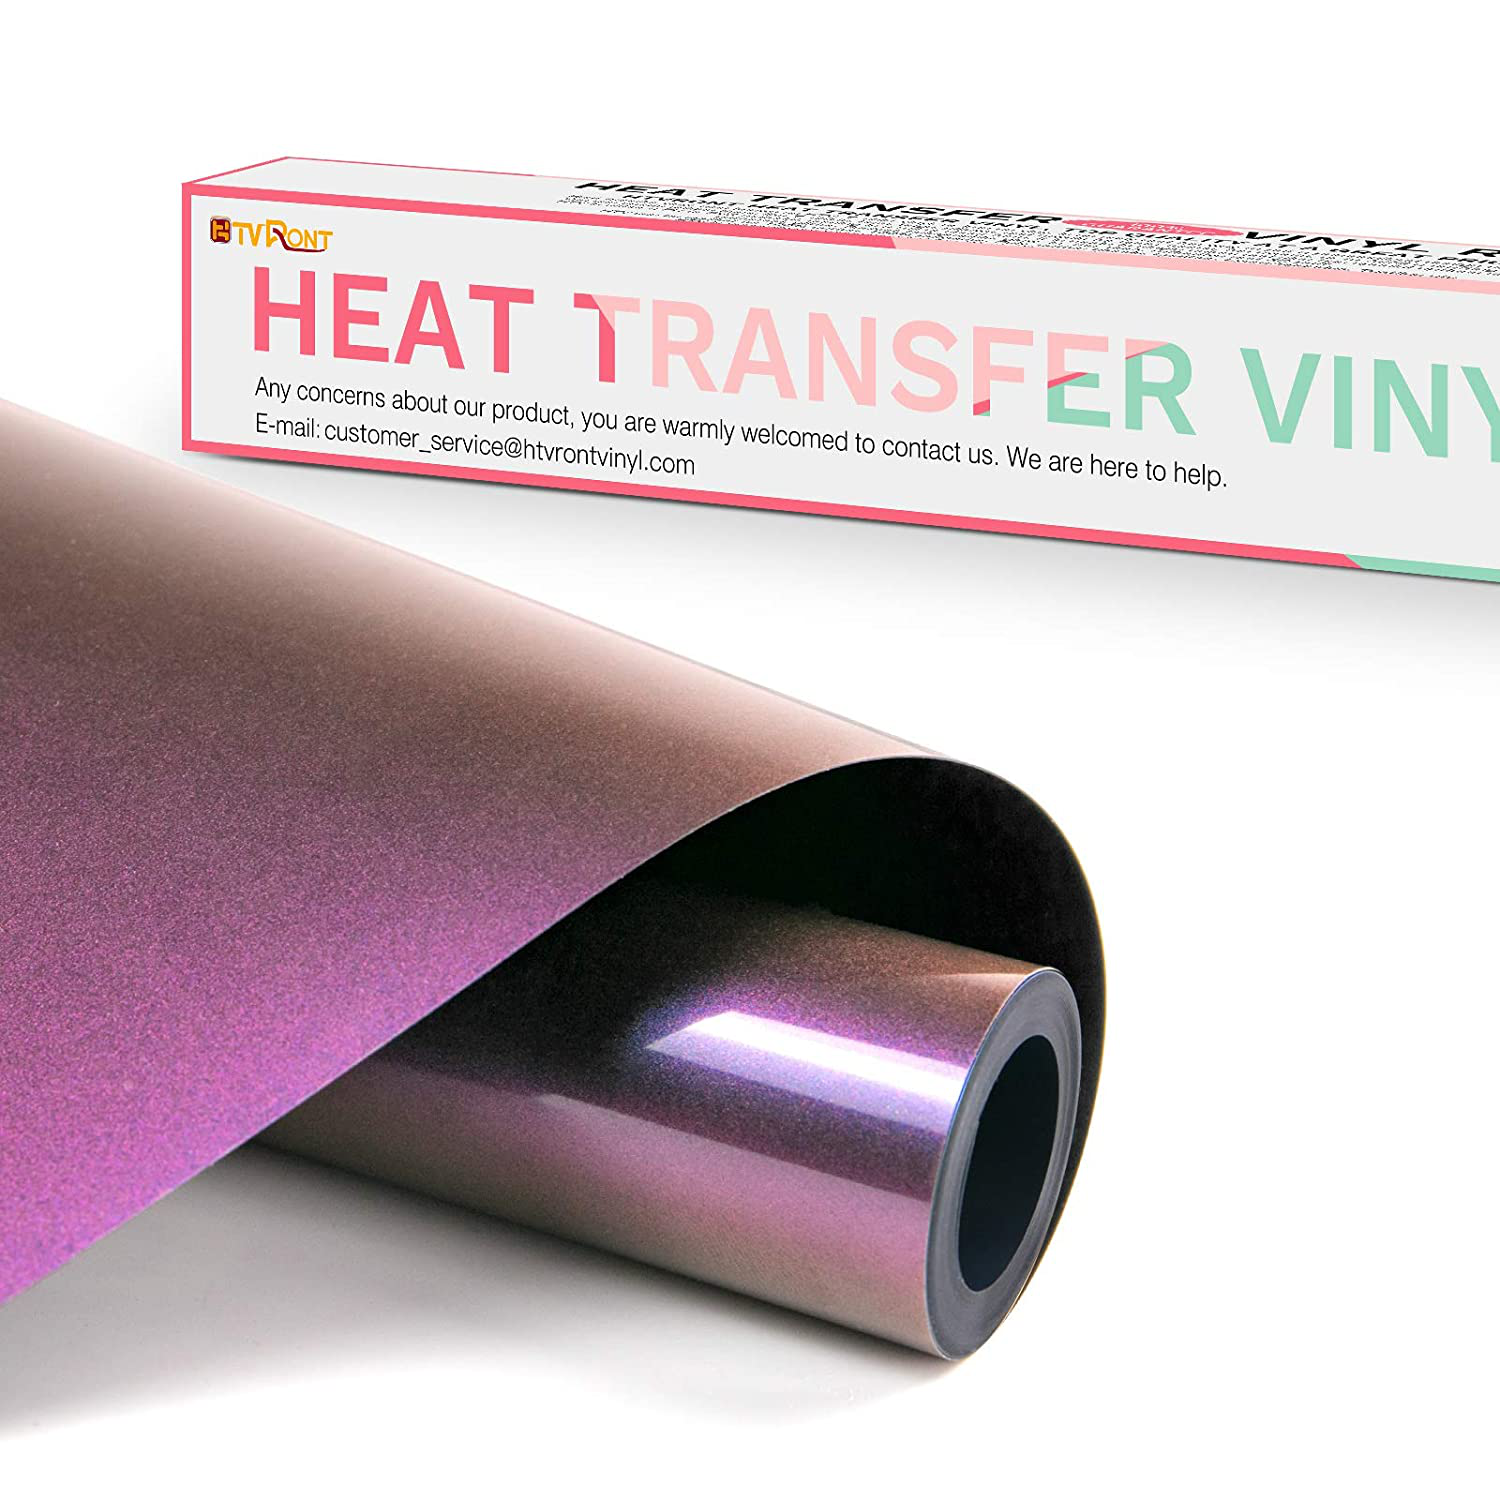 HTVRONT HTV Vinyl Rolls Heat Transfer Vinyl - 12" x 8ft Red HTV Vinyl for Shirts, Iron on Vinyl for Cricut & Cameo - Easy to Cut & Weed for Heat Vinyl Design